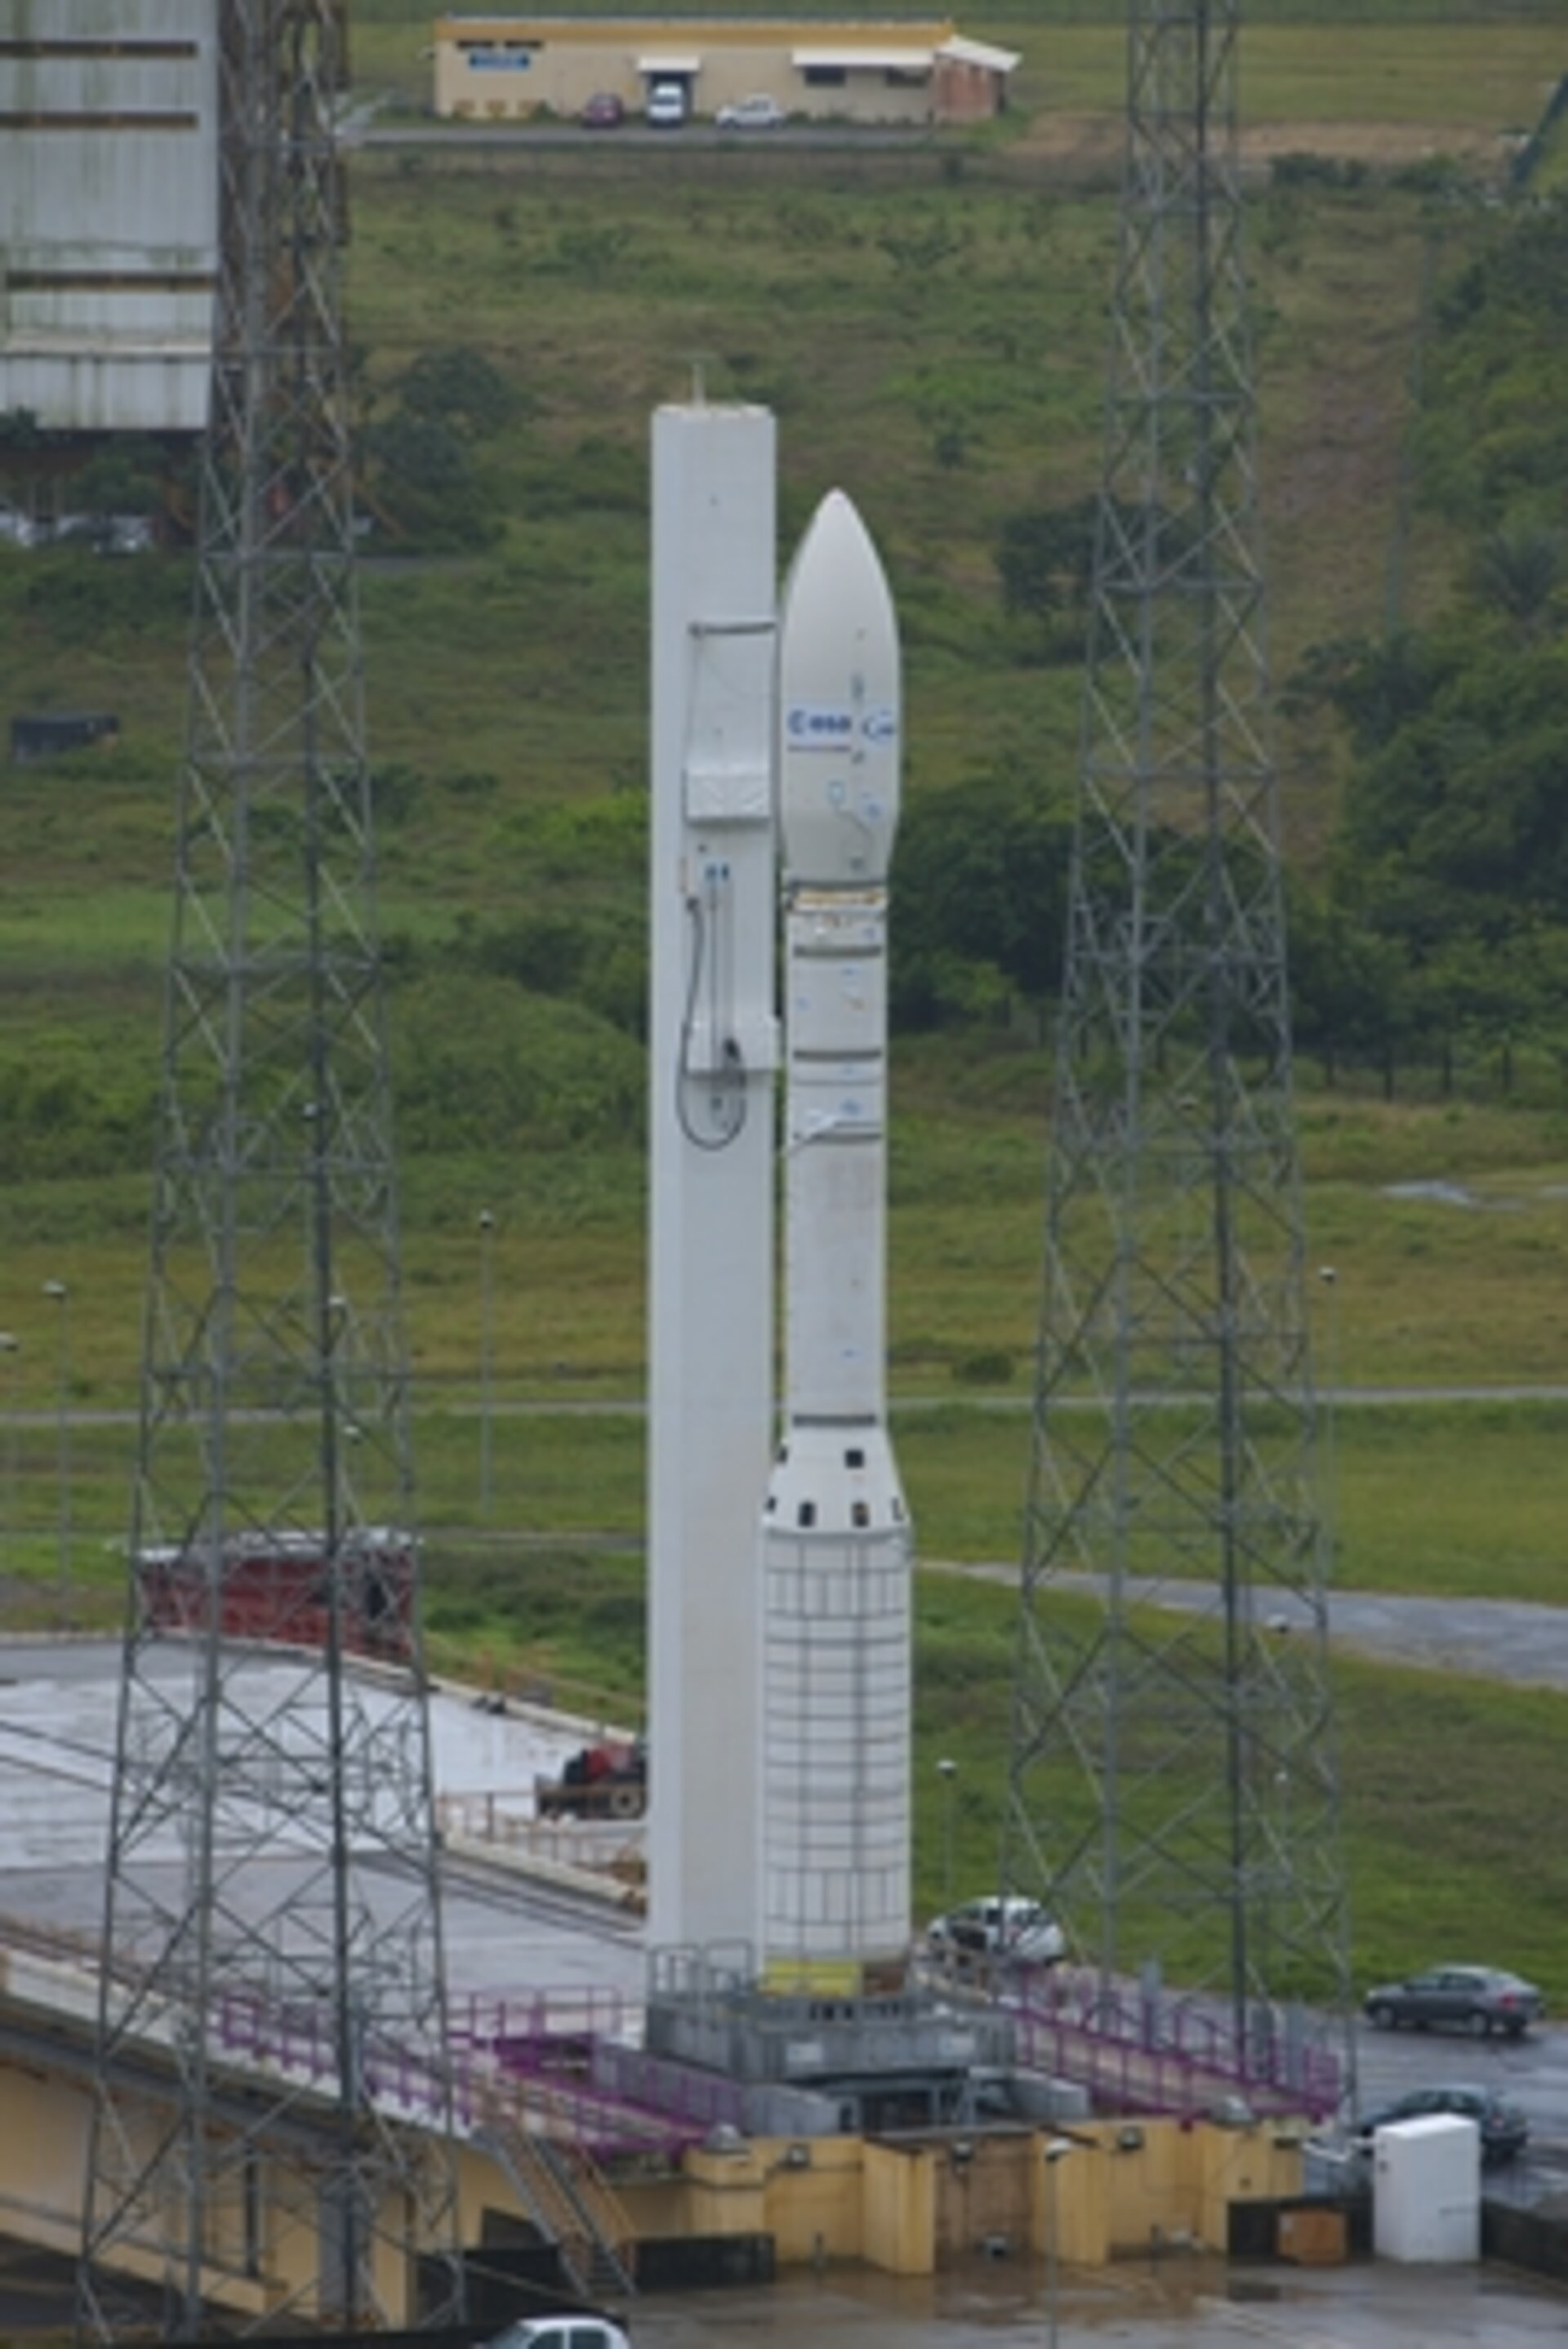 Vega, Europe's small launcher